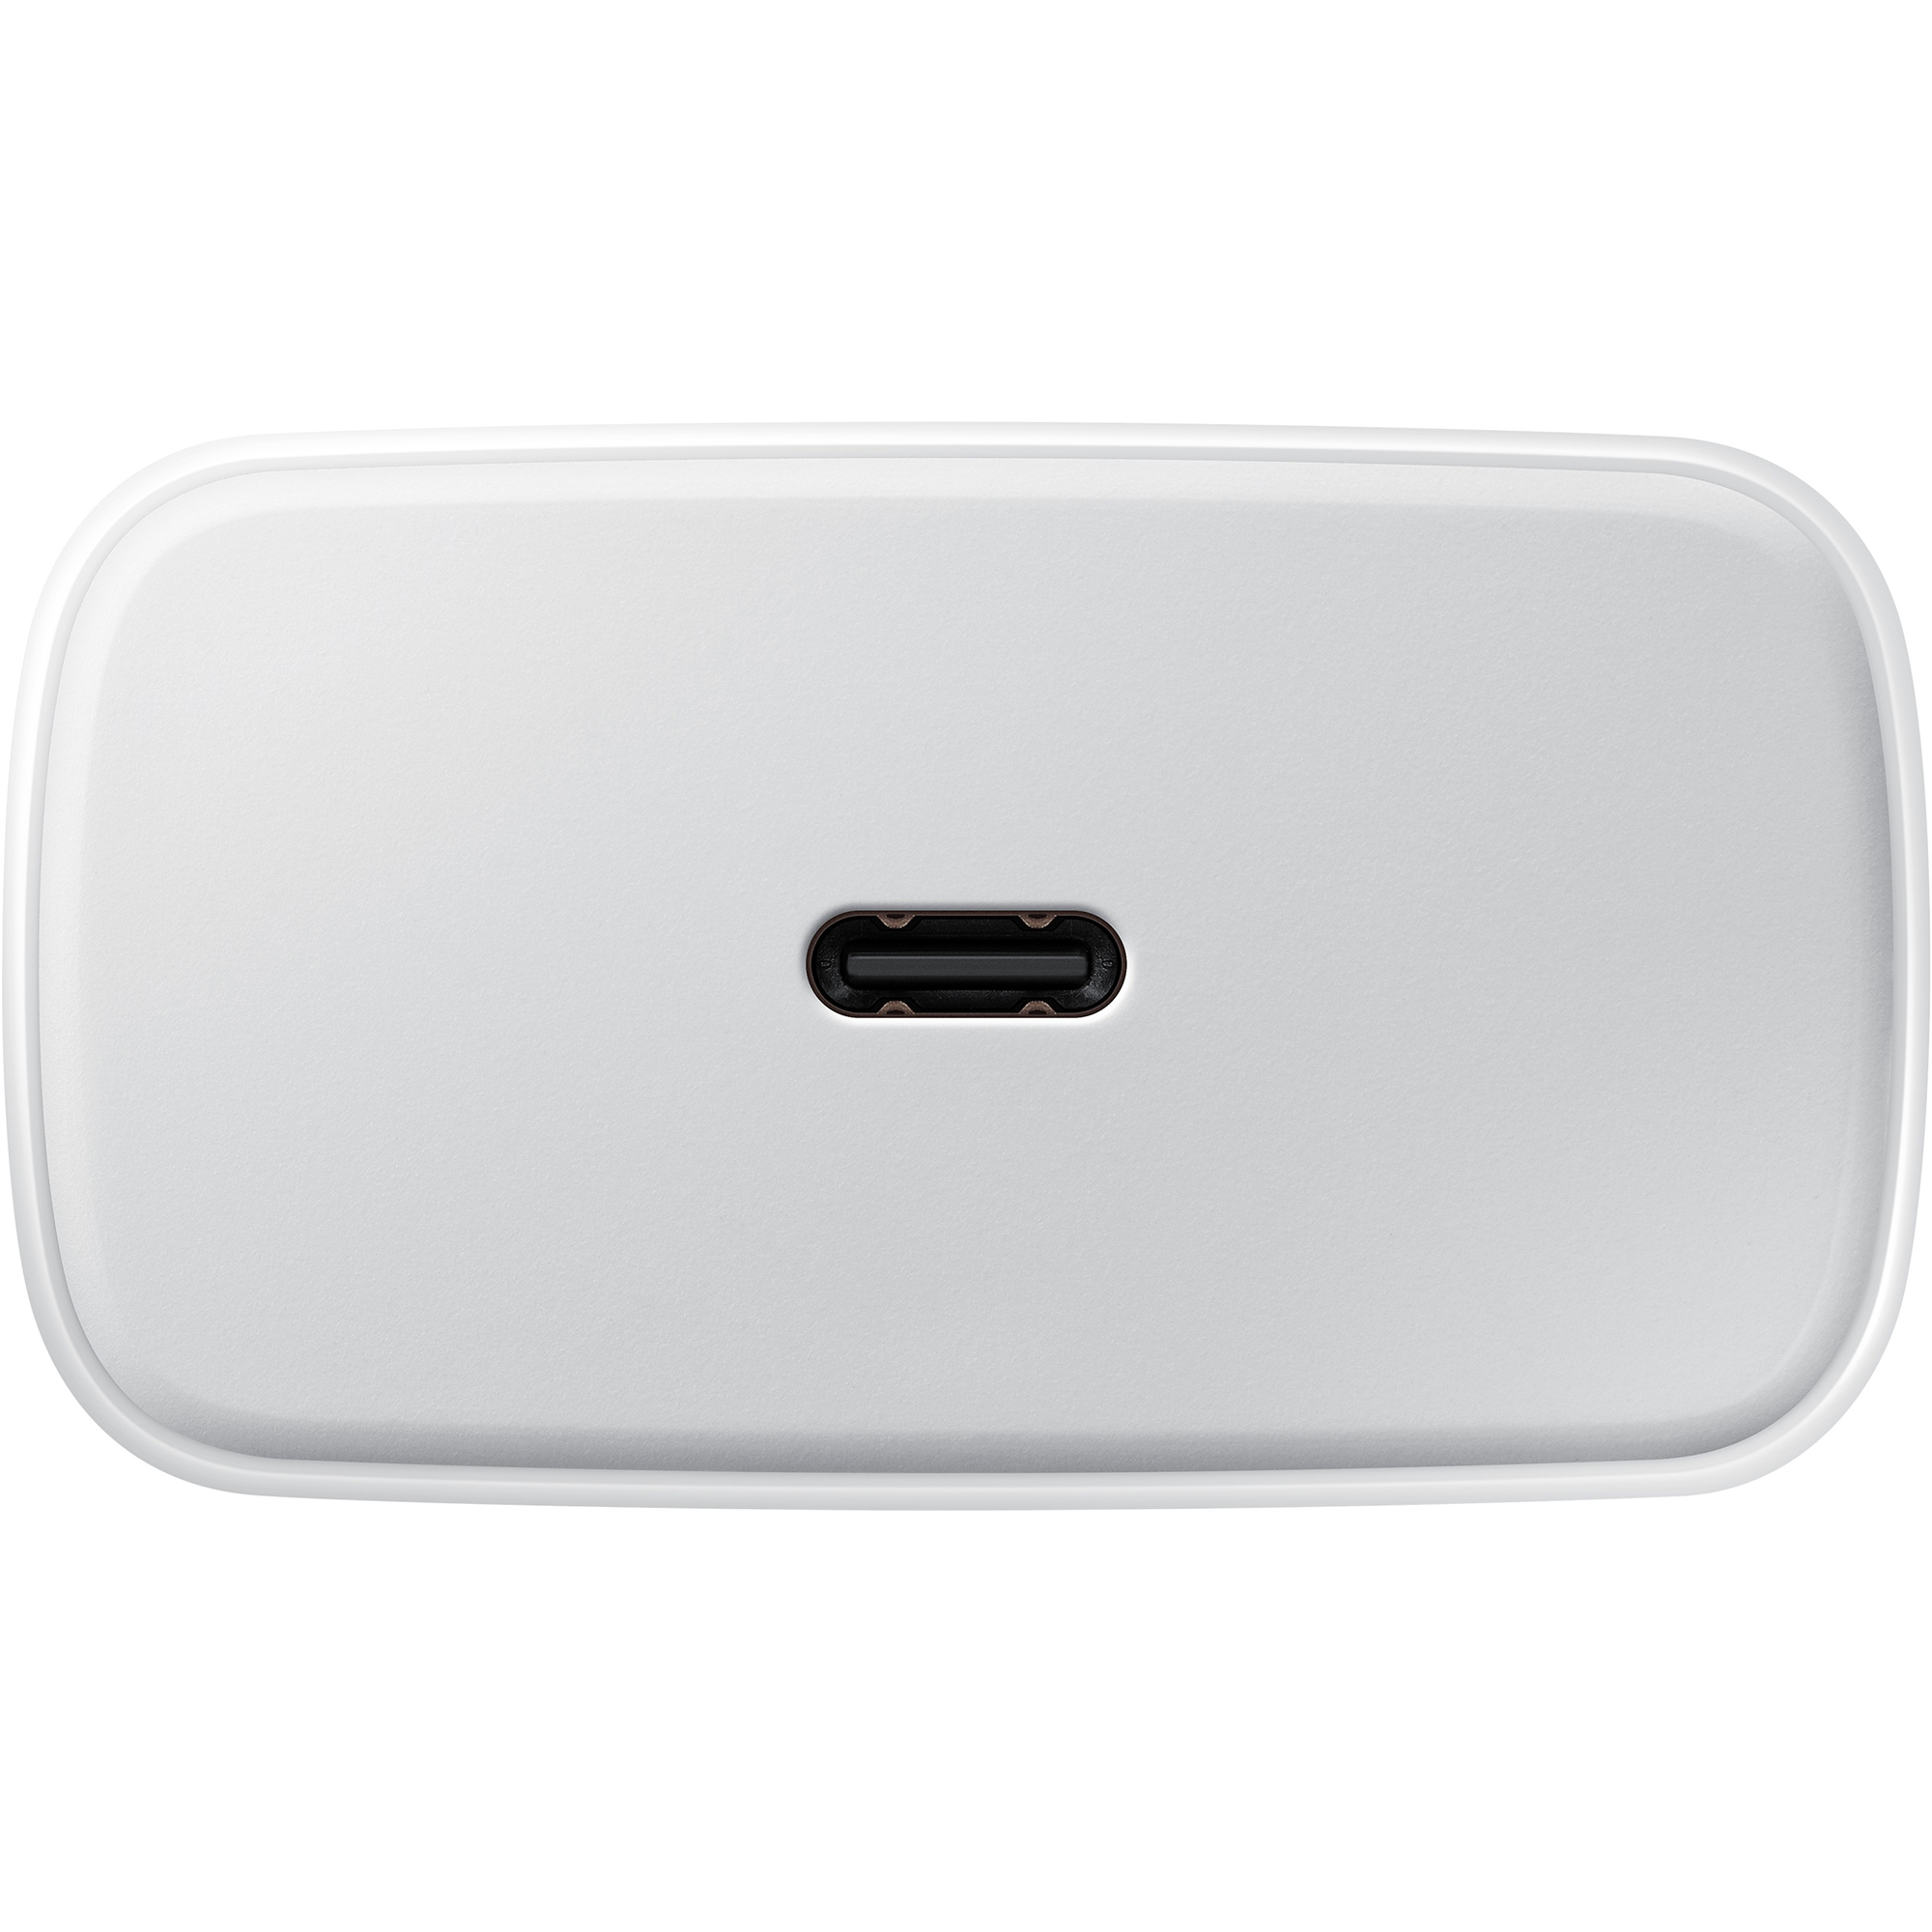 Сетевое зарядное устройство Samsung TA-845 (EP-TA845XWEGRU), цвет белый - фото 4